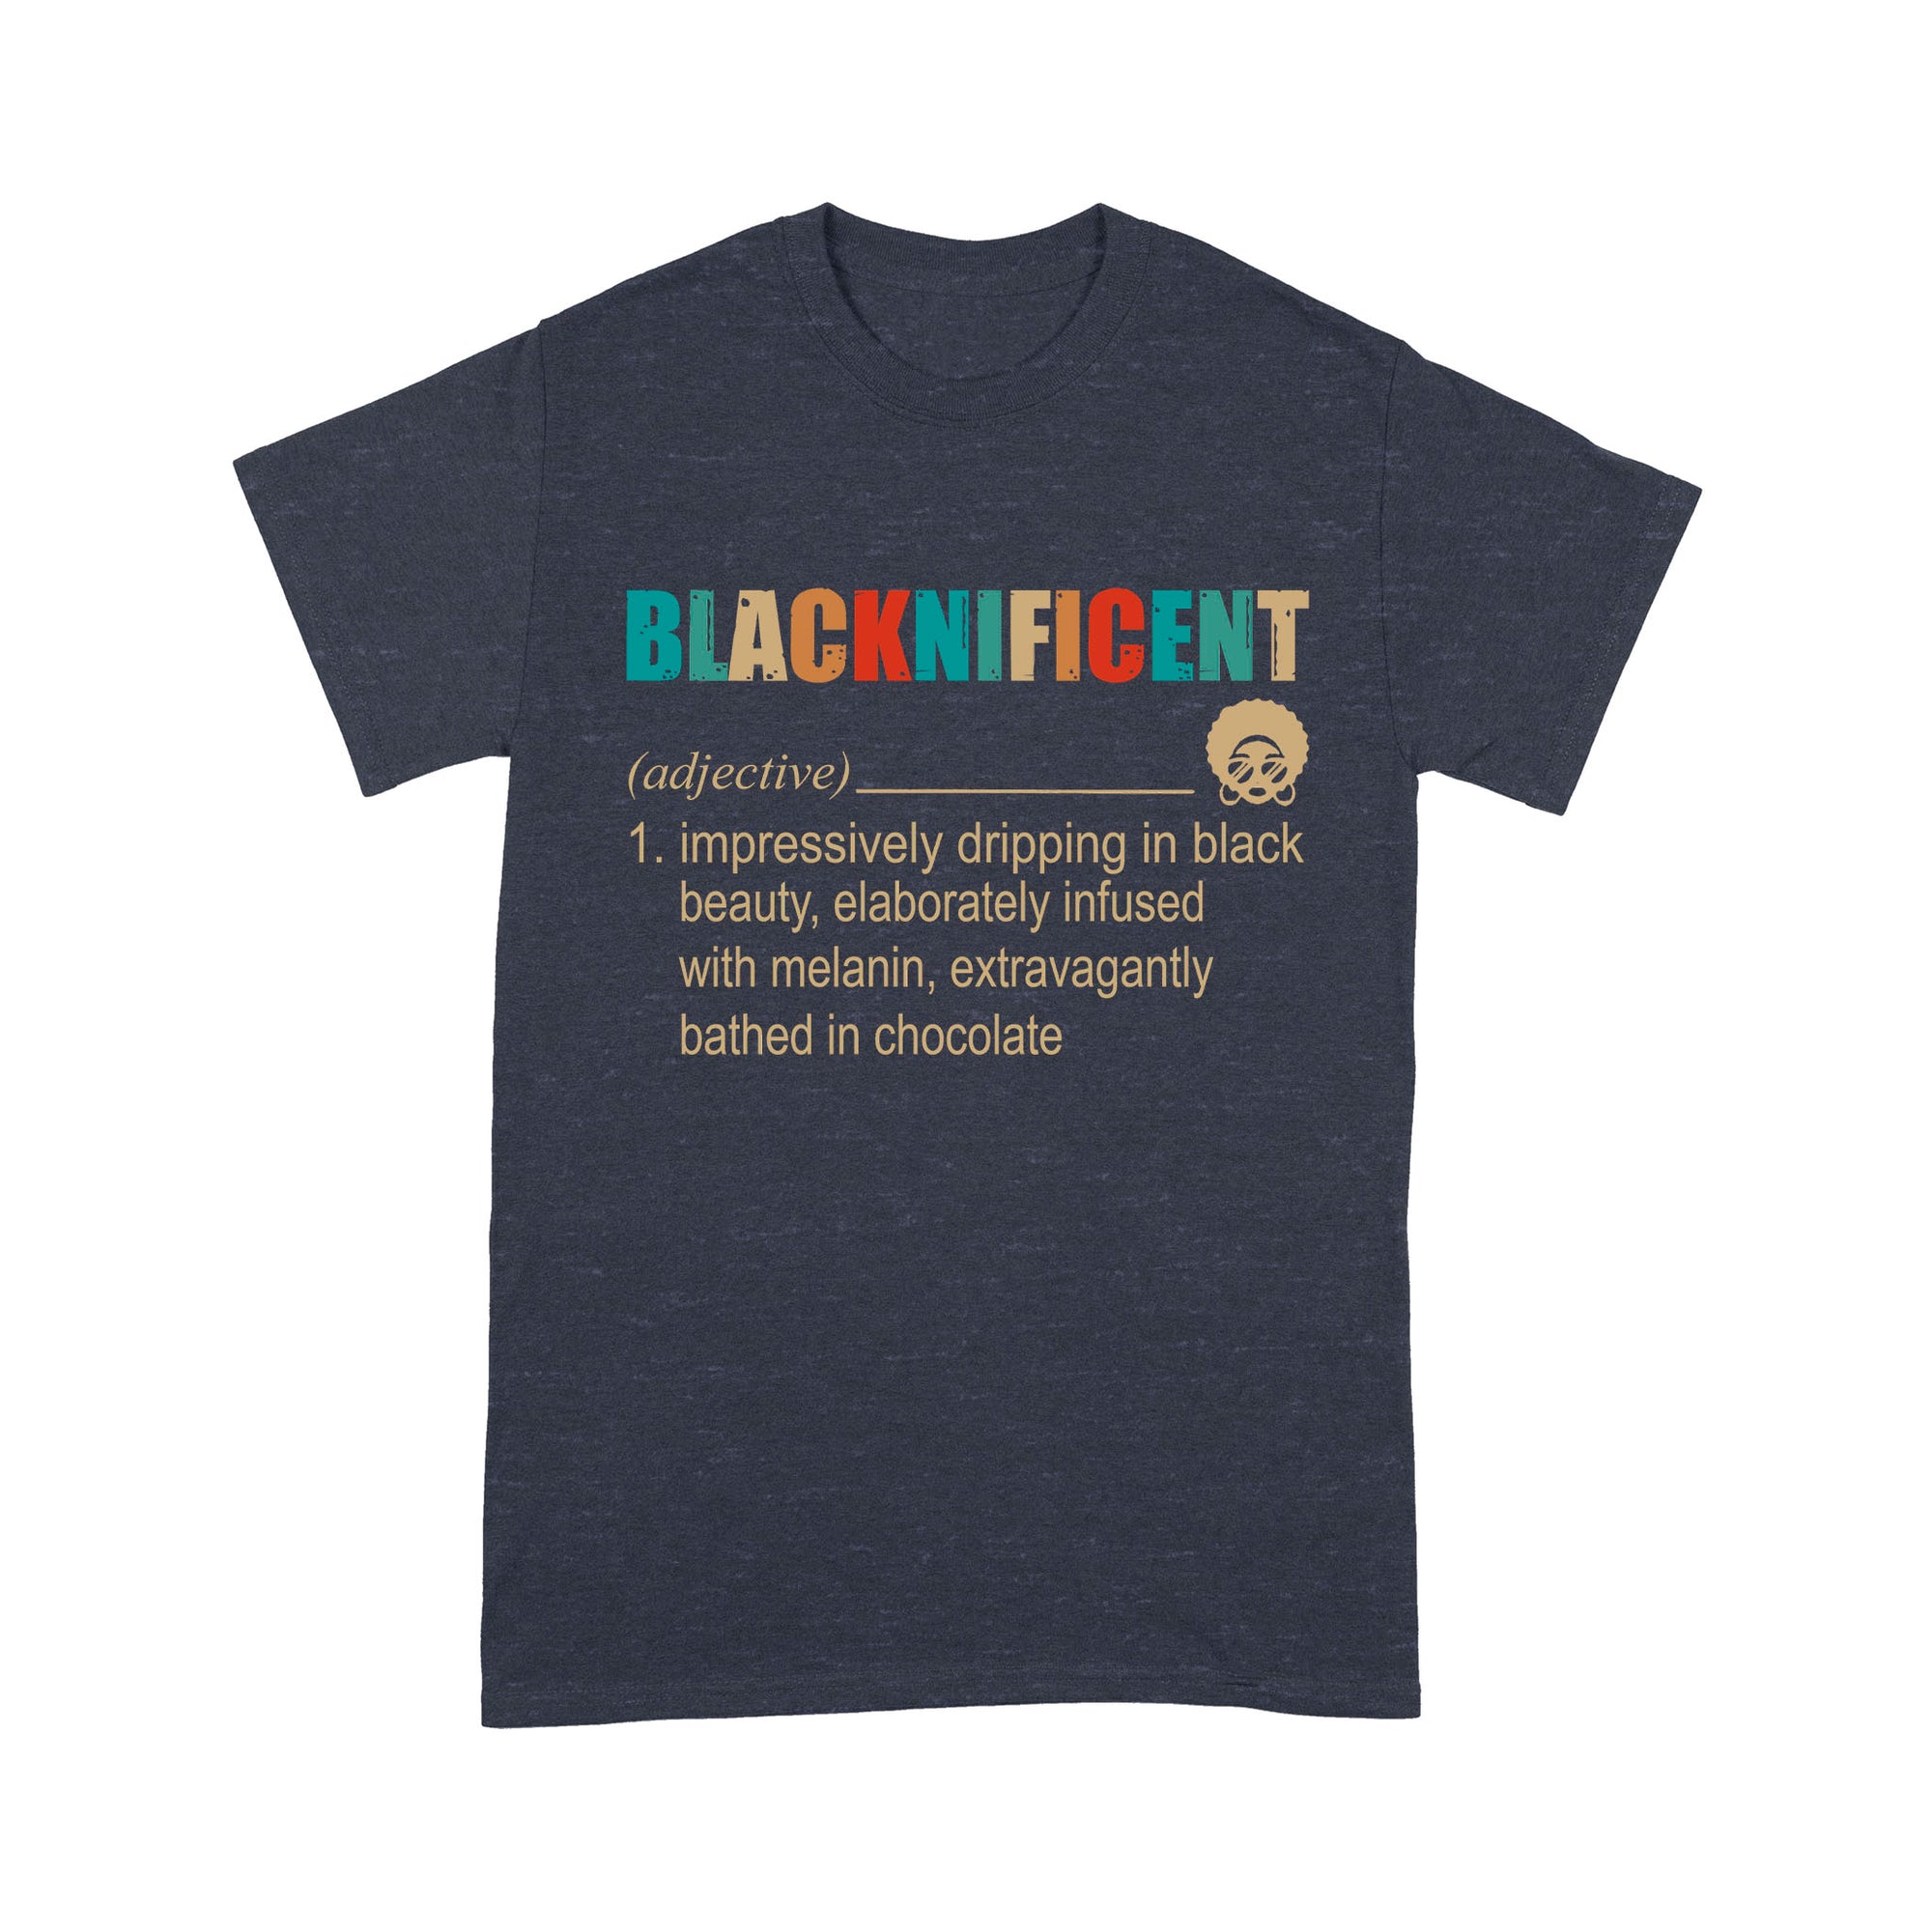 Blacknificent Definition Impressively Dripping In Black Beauty Melanin - Premium T-shirt